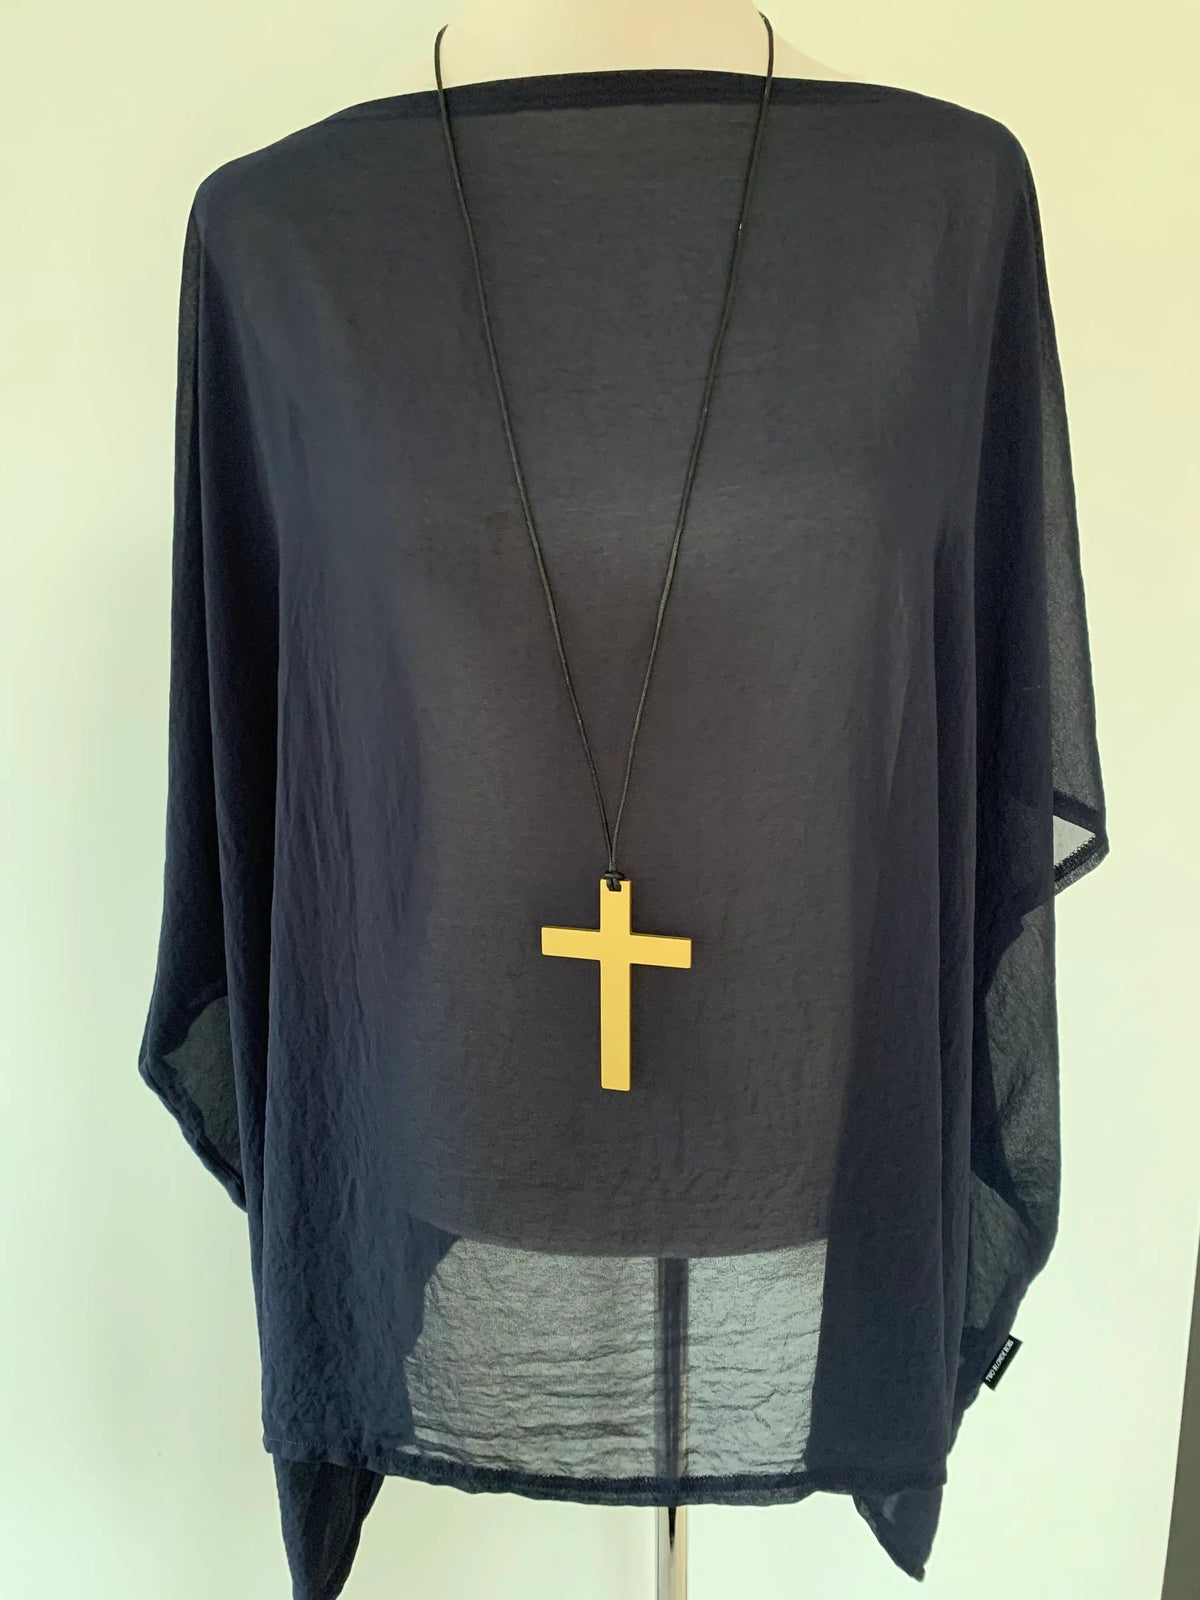 Small Bronze Cross Necklace - TWO BLONDE BOBS Accessories NZ LUMA